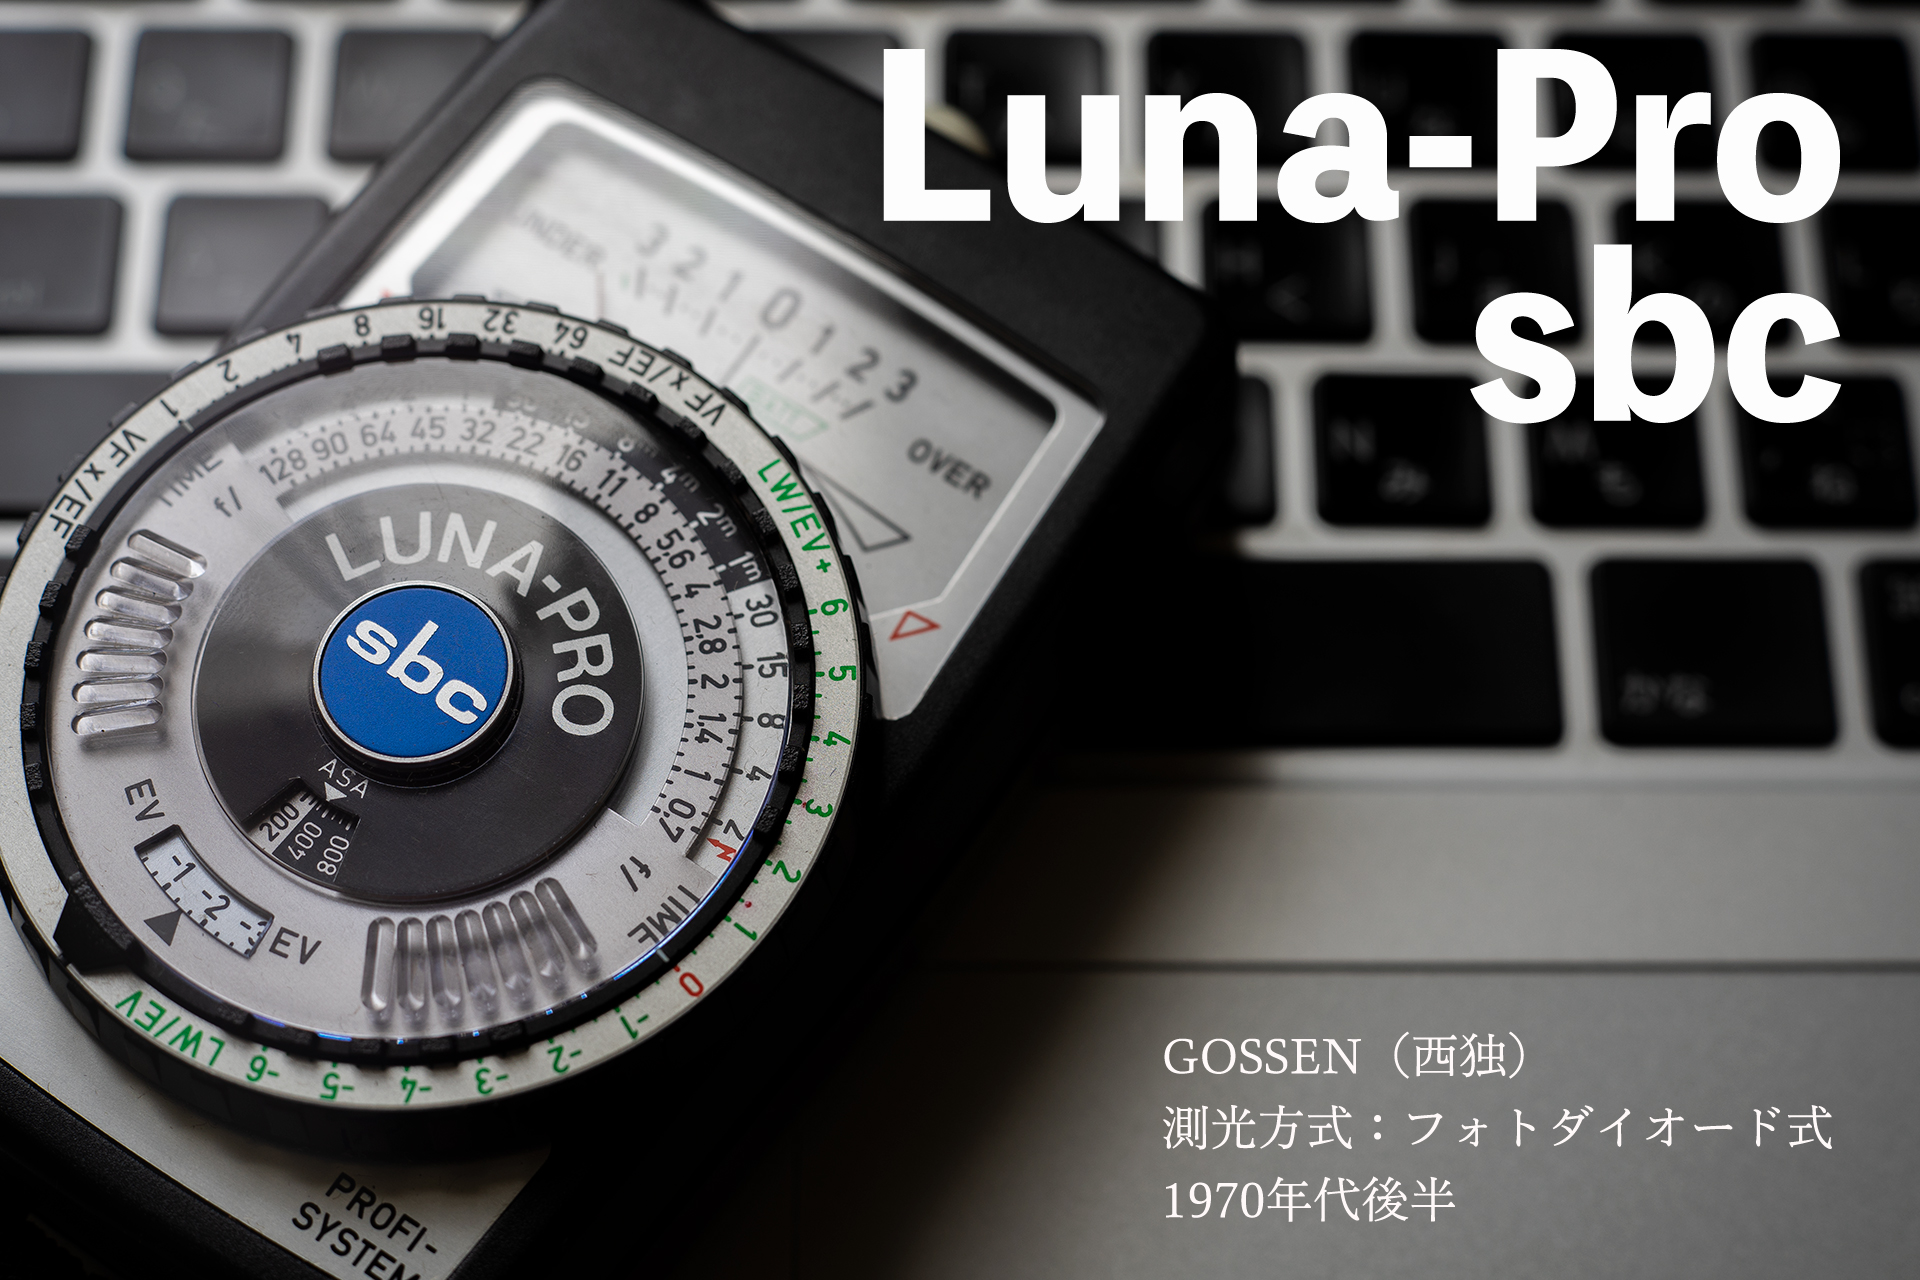 Luna-Pro sbc / Gossen（西独）